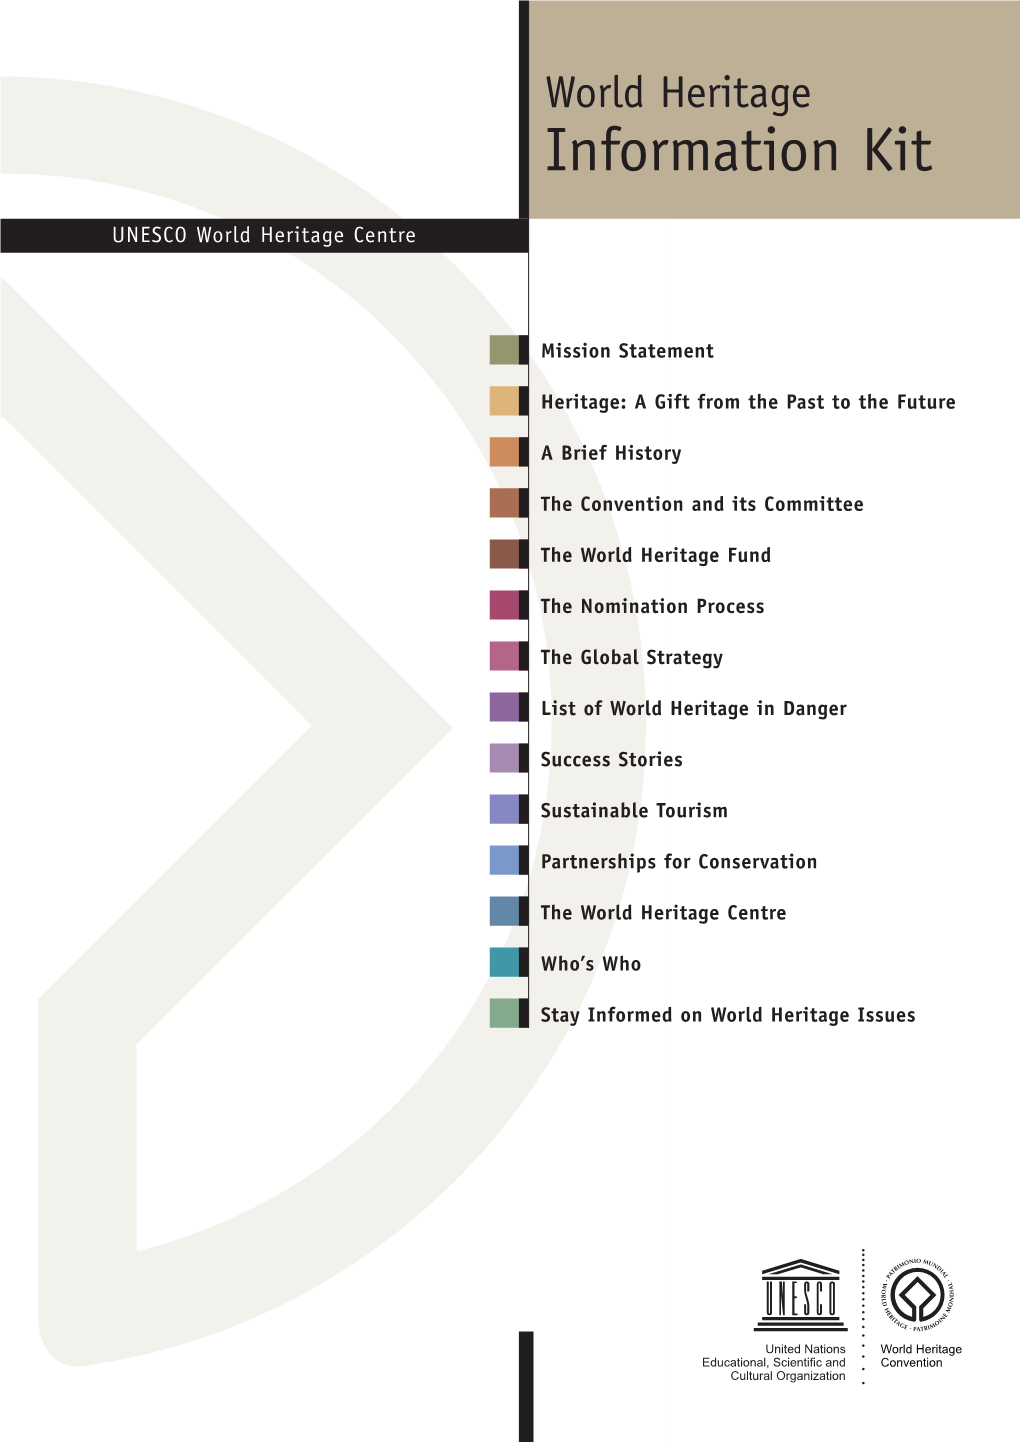 World Heritage Information Kit 2008